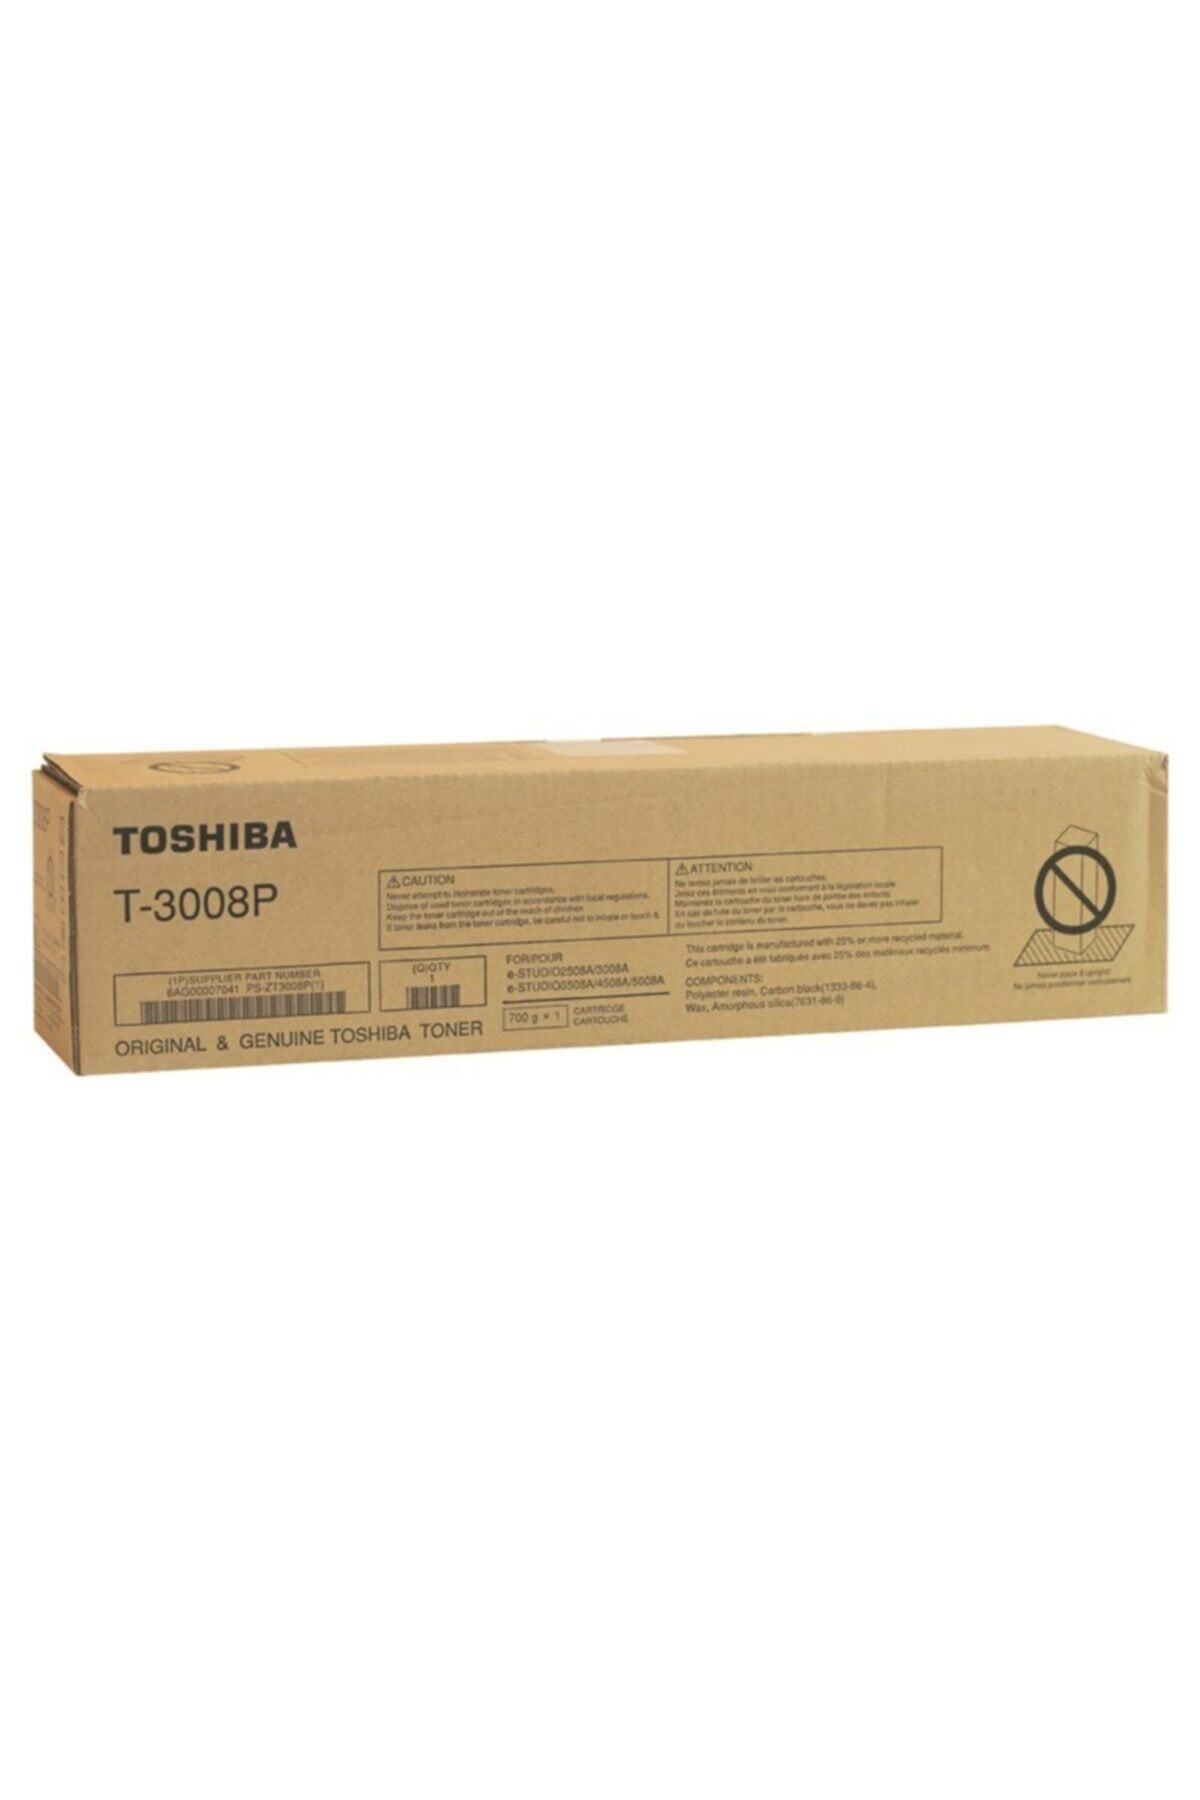 Toshiba Toshıba T-3008P Toner e-Studio 2008-2508-3508-4508-5008